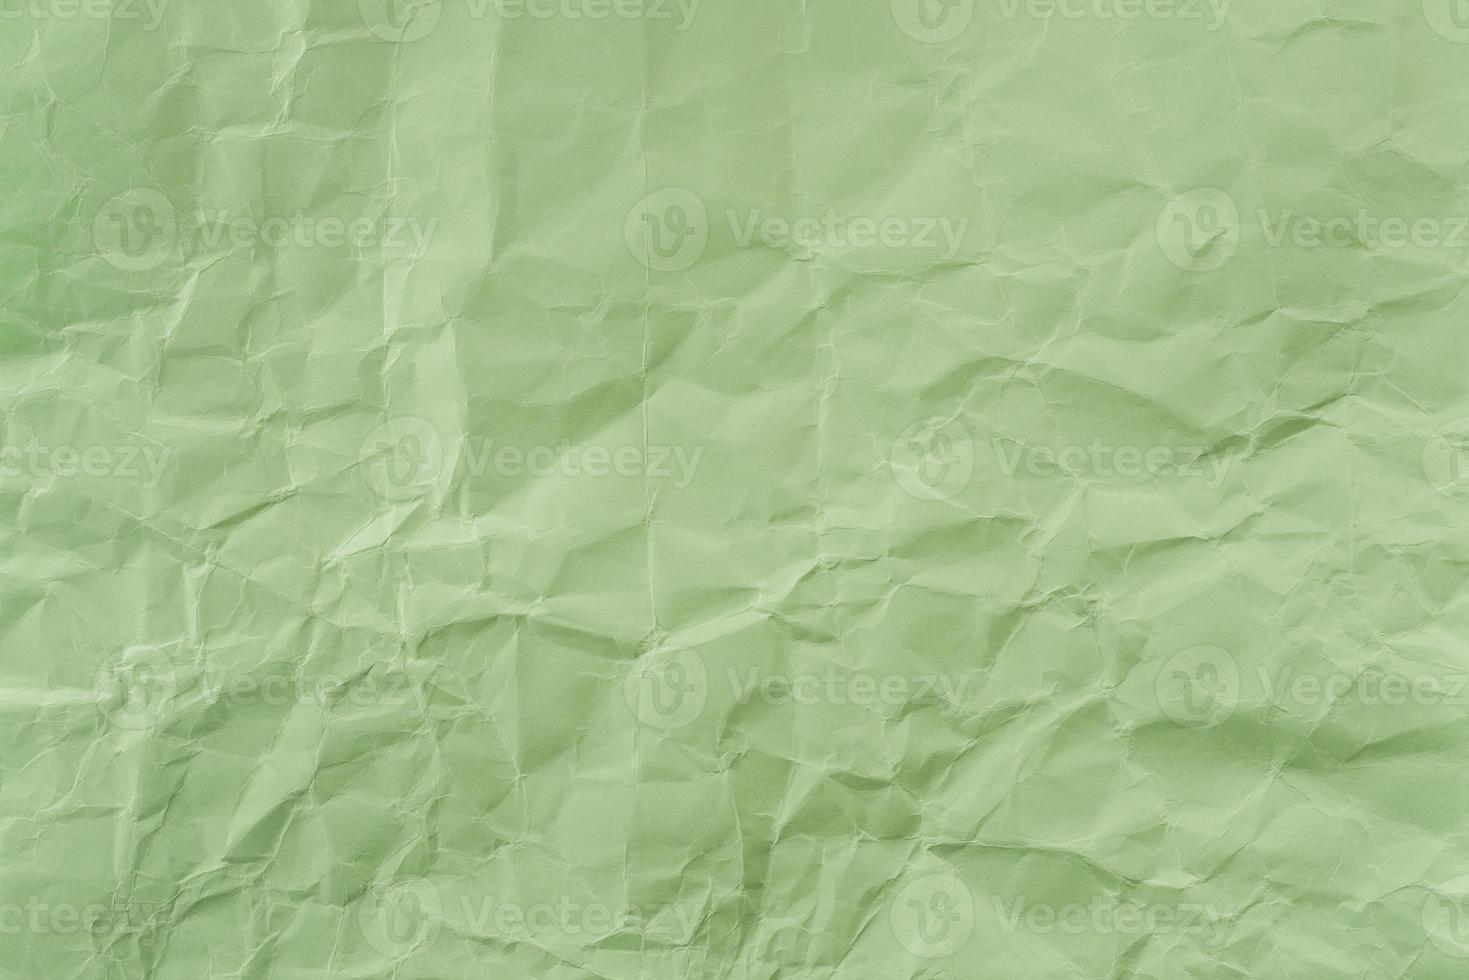 carta verde stropicciata con consistenza morbida. sfondo semplice. foto